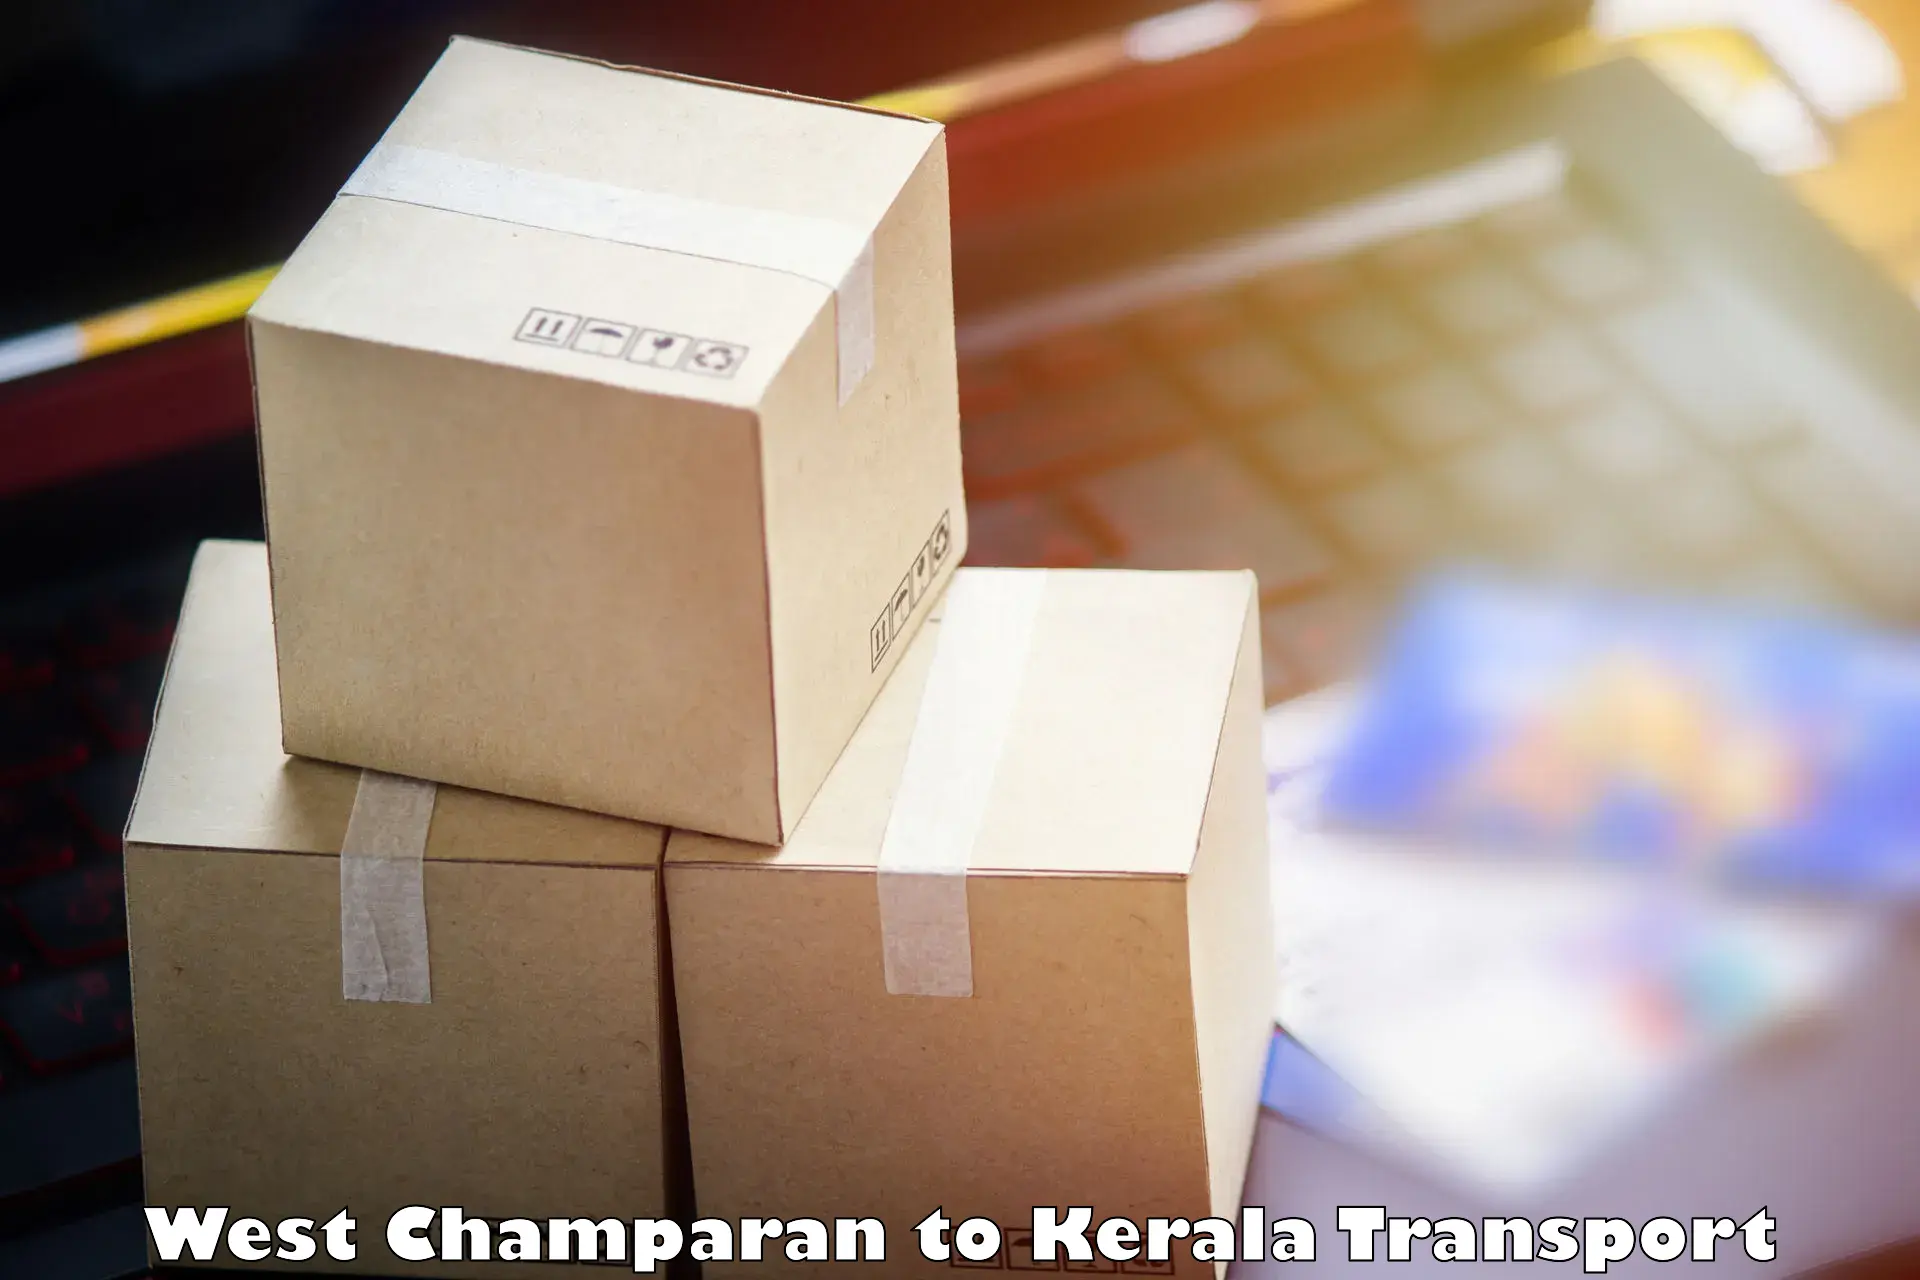 Pick up transport service West Champaran to Kochi